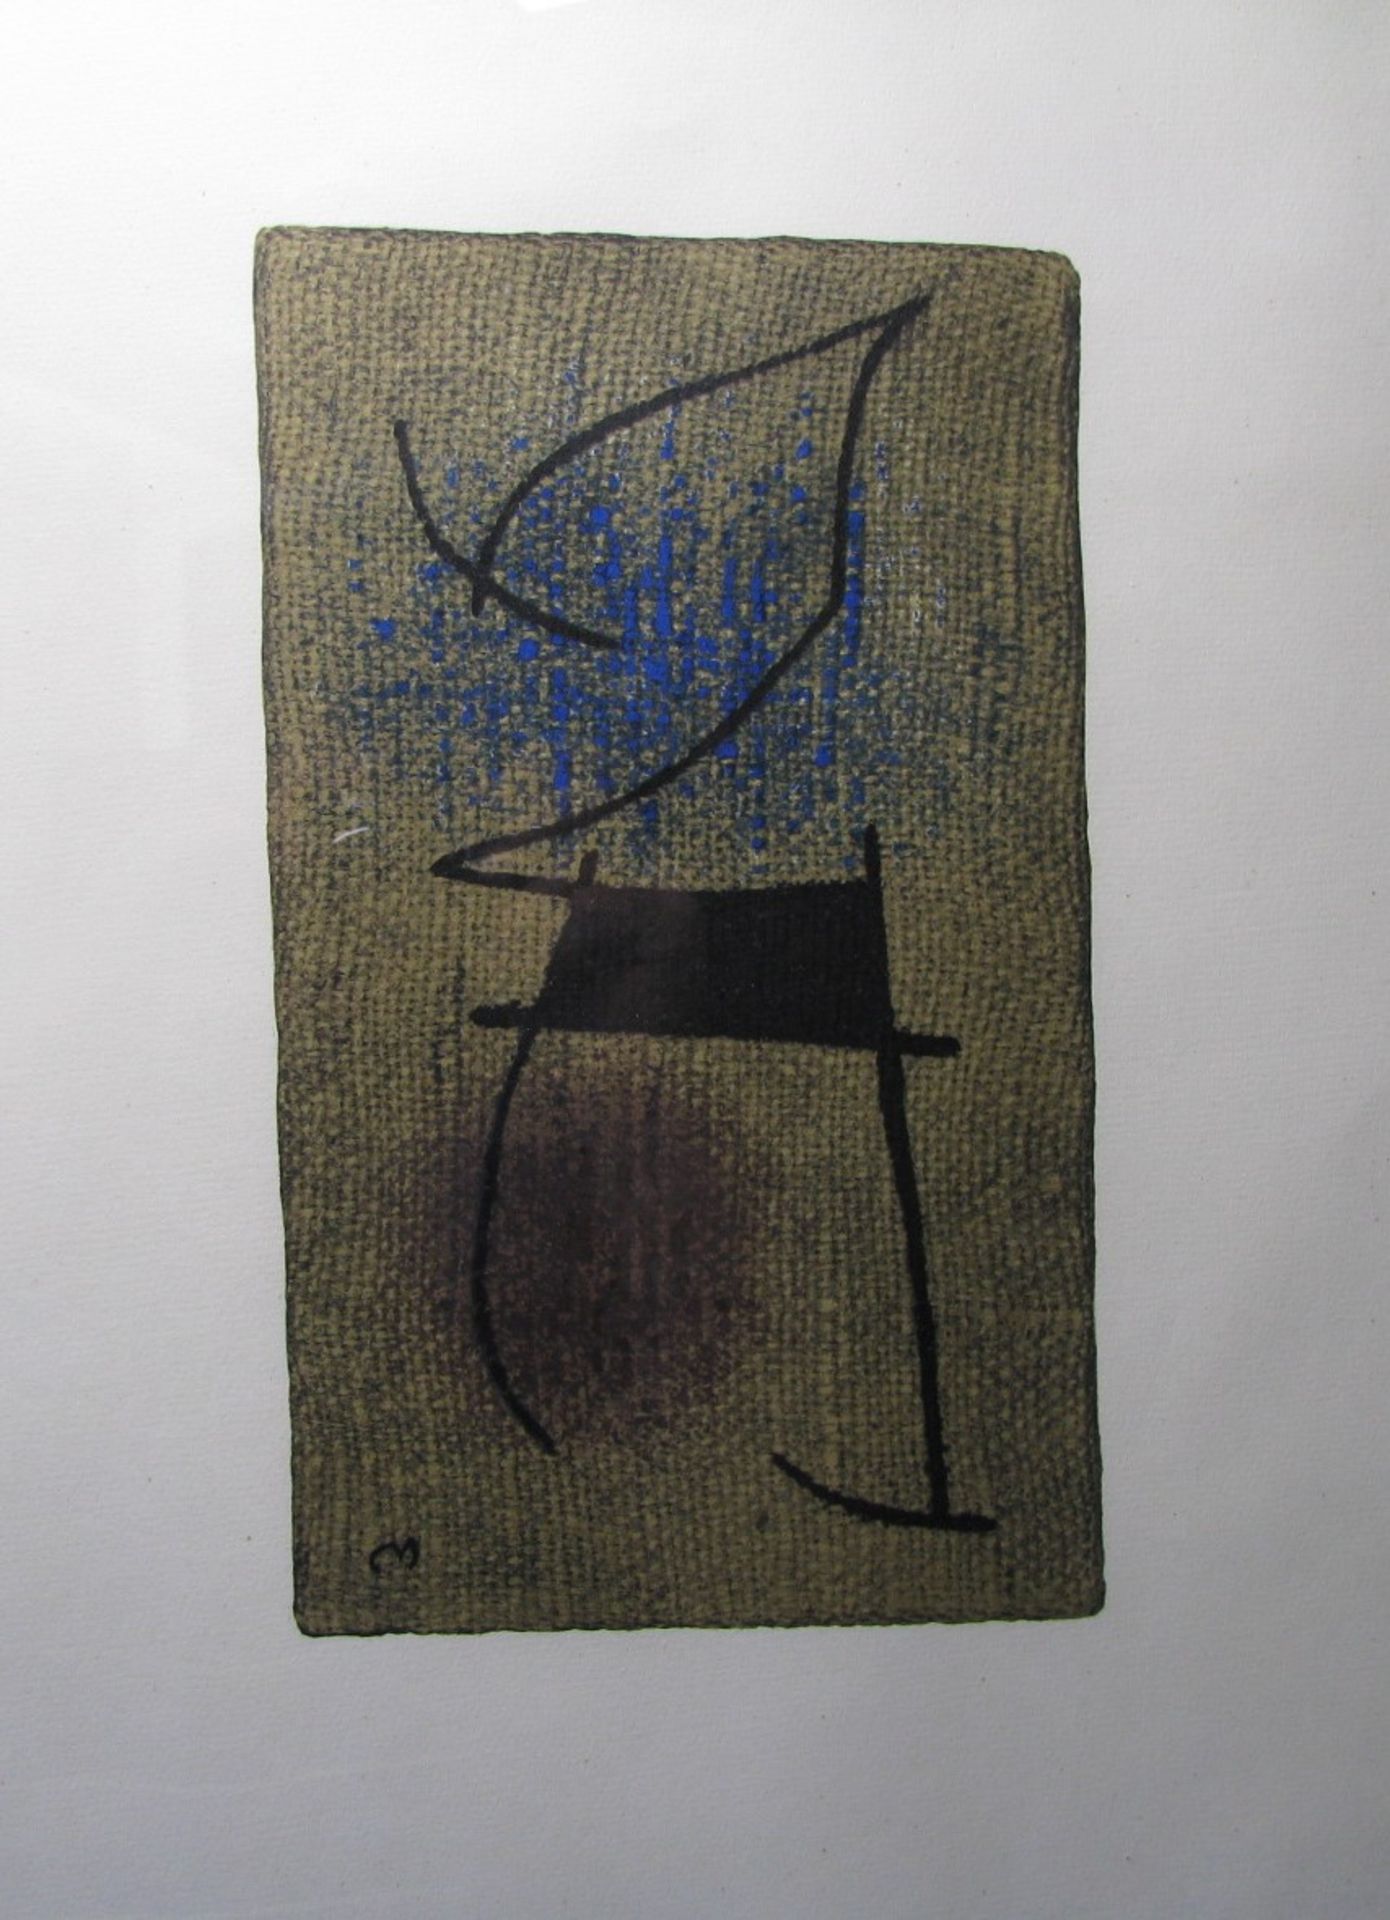 Miró, Joan, 1893 - 1983, Barcelona - Palma,